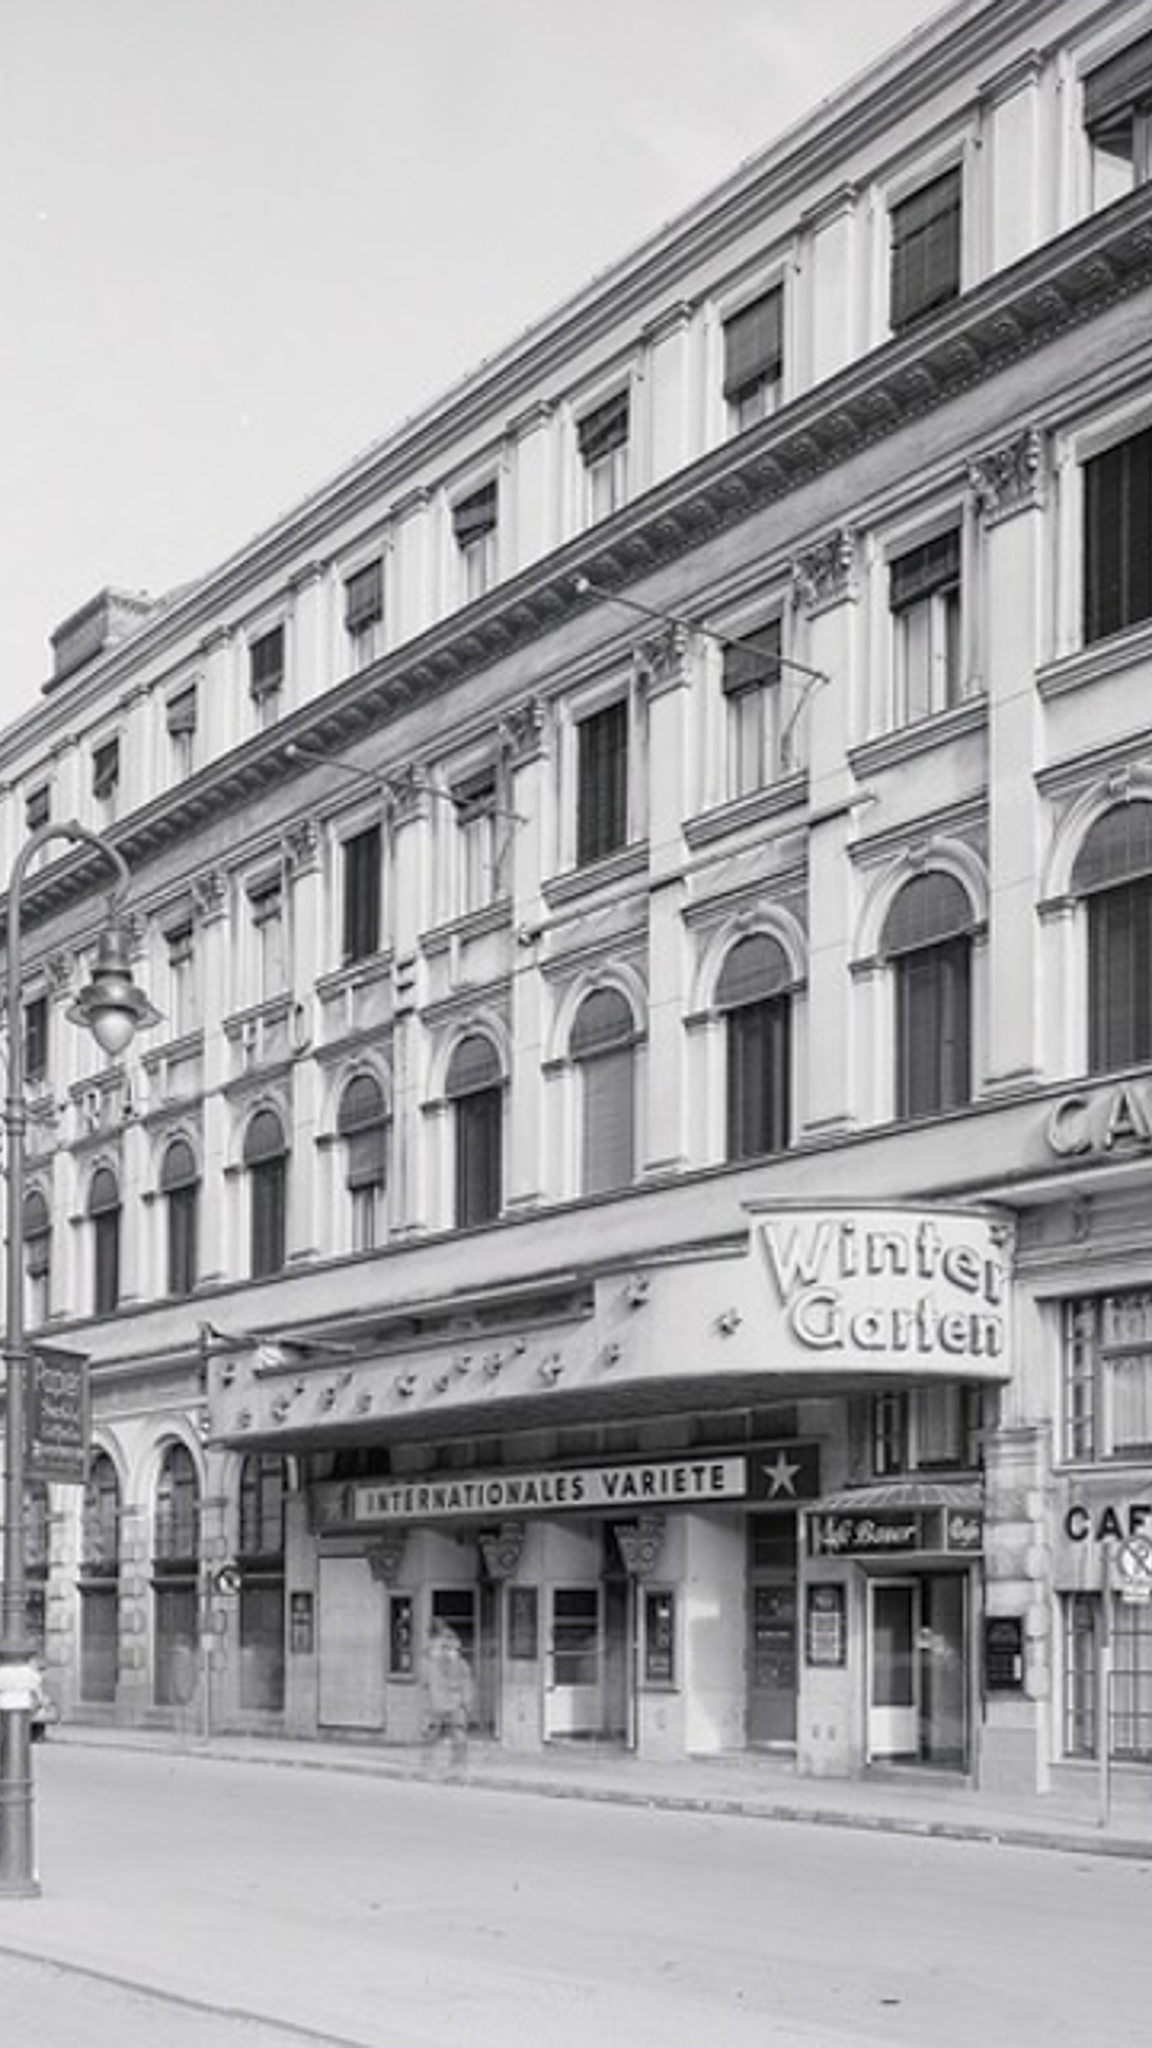 Wintergarten Berlin and the Central Hotel, 1940. Arkitekturmuseums TU TBS 500,105